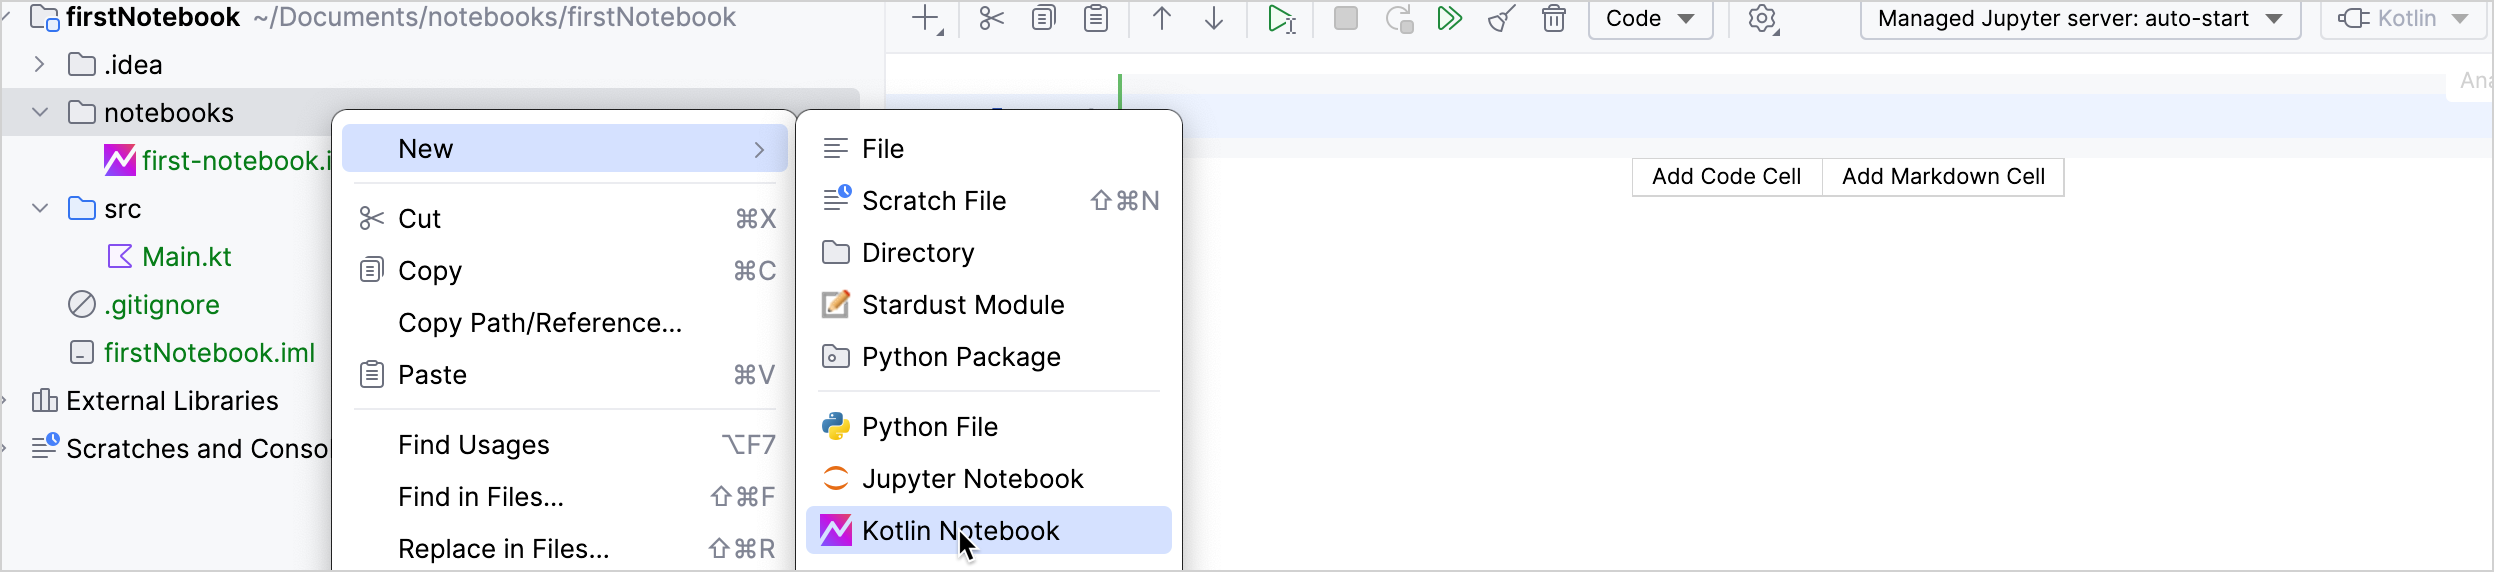 Create a new Kotlin Notebook